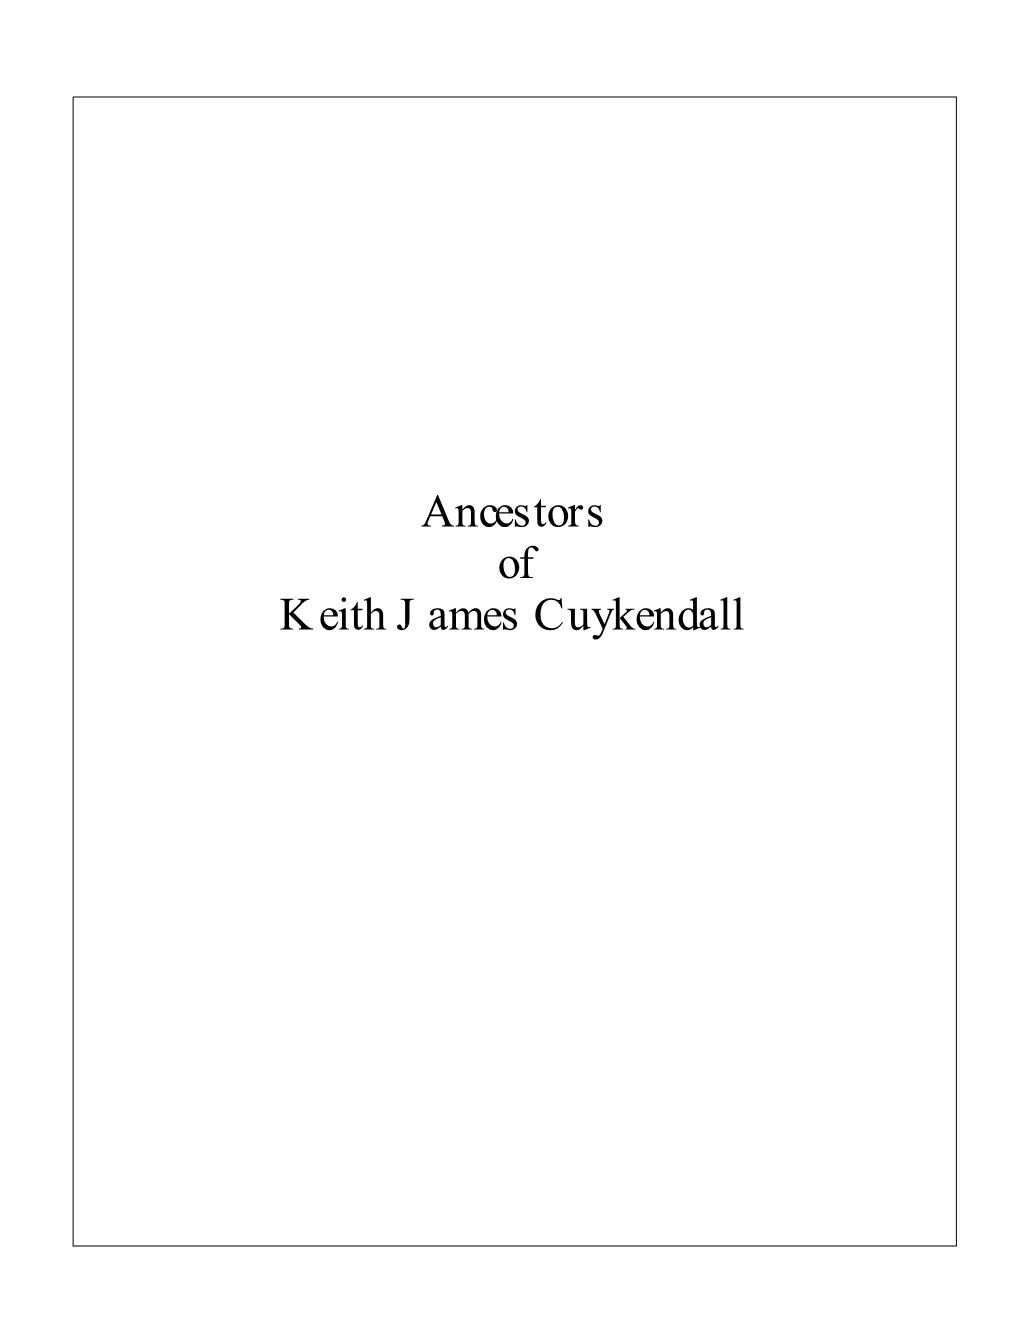 Ancestors of Keith James Cuykendall